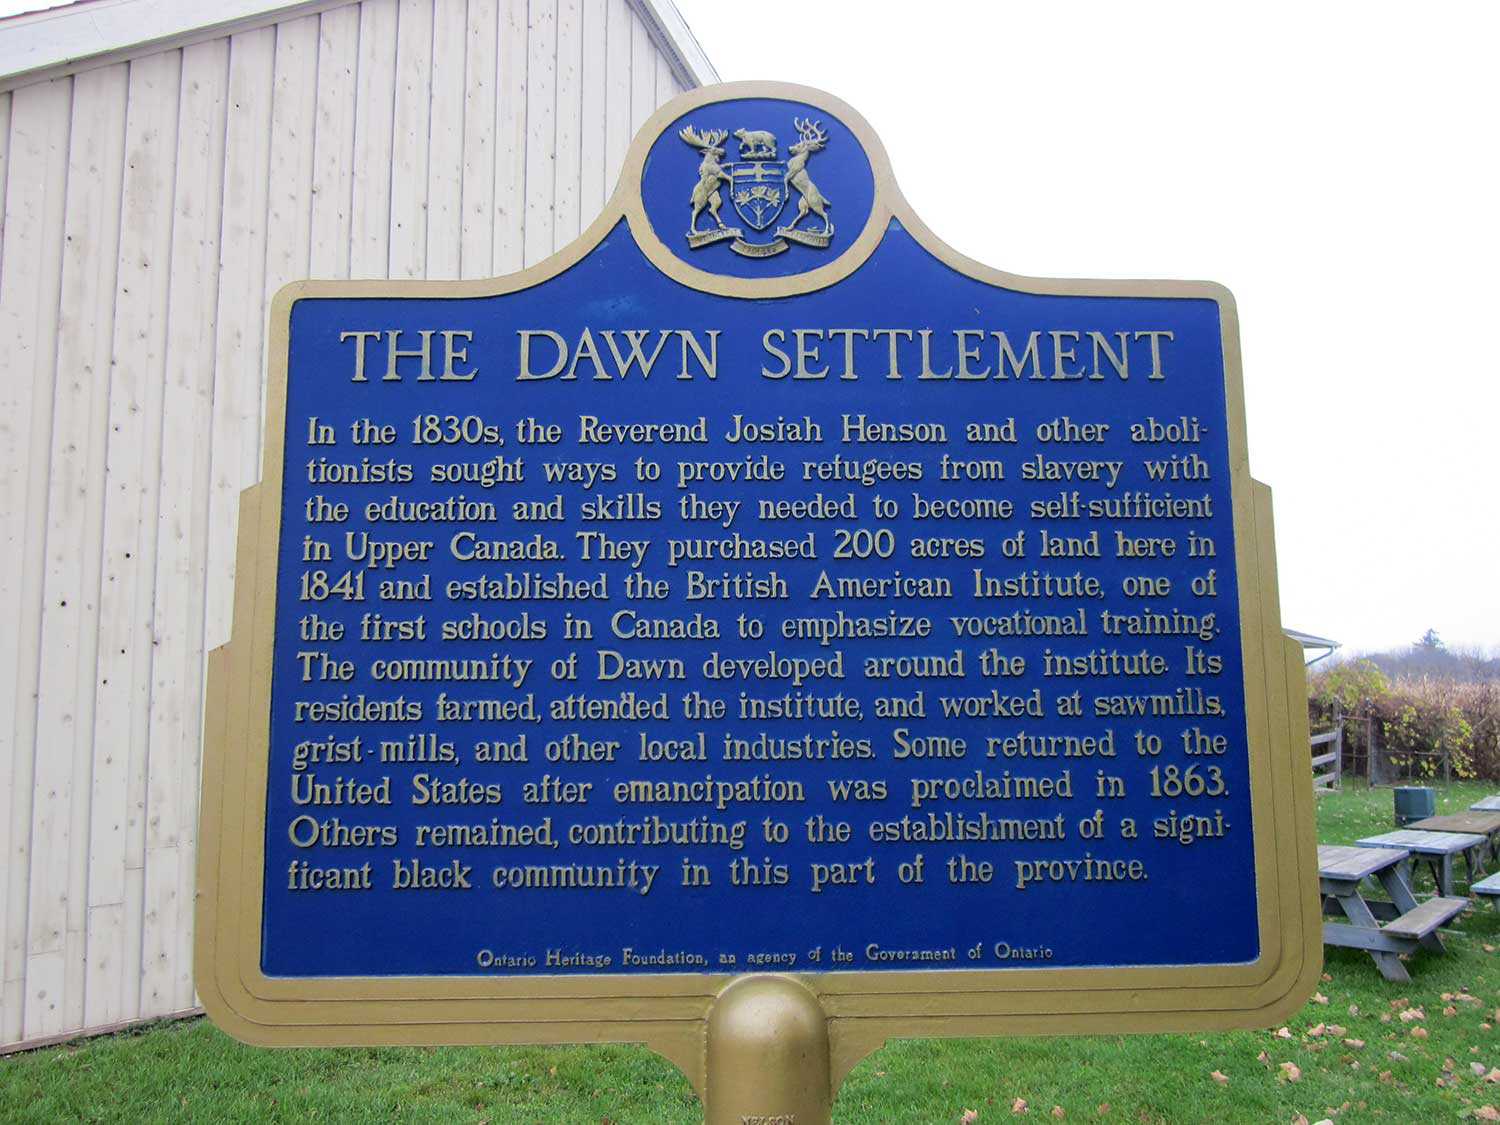 Ontario Heritage Trust plaque commemorating the Dawn Settlement